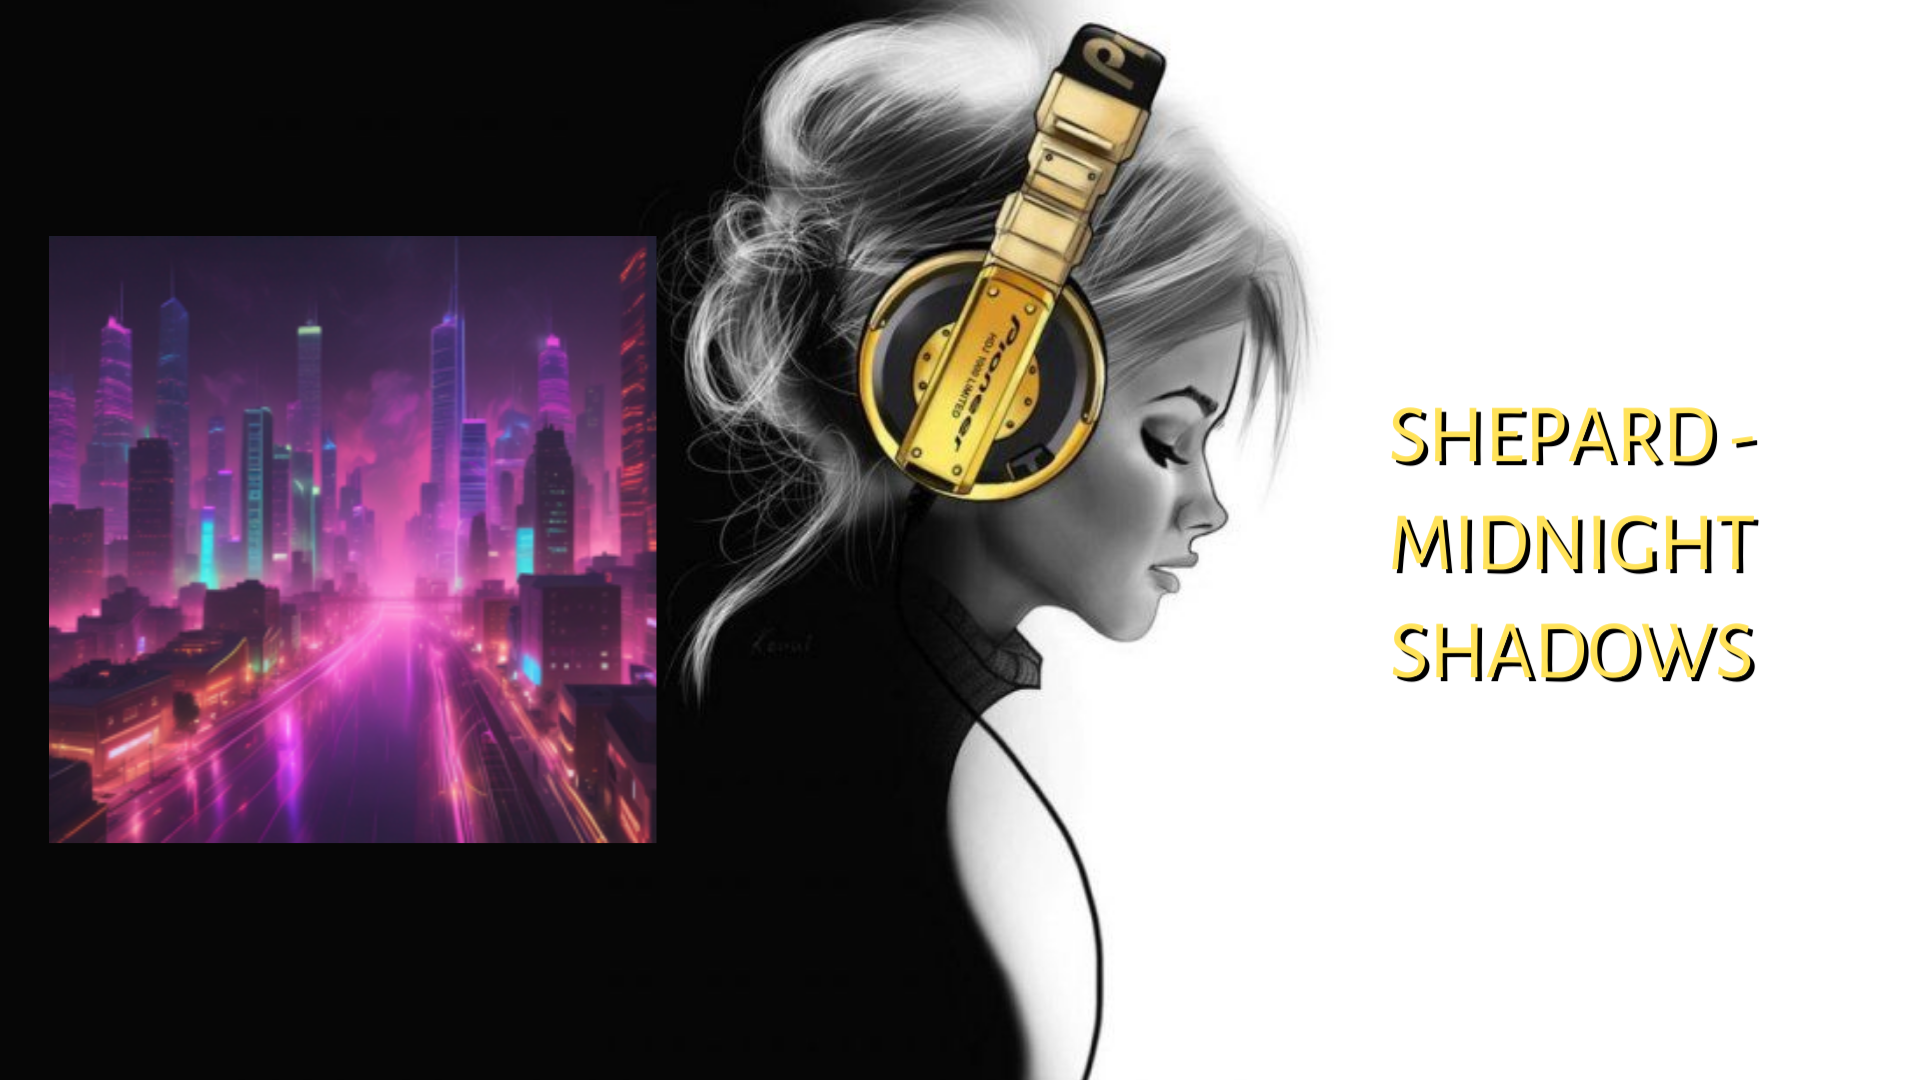 Shepard - Midnight Shadows